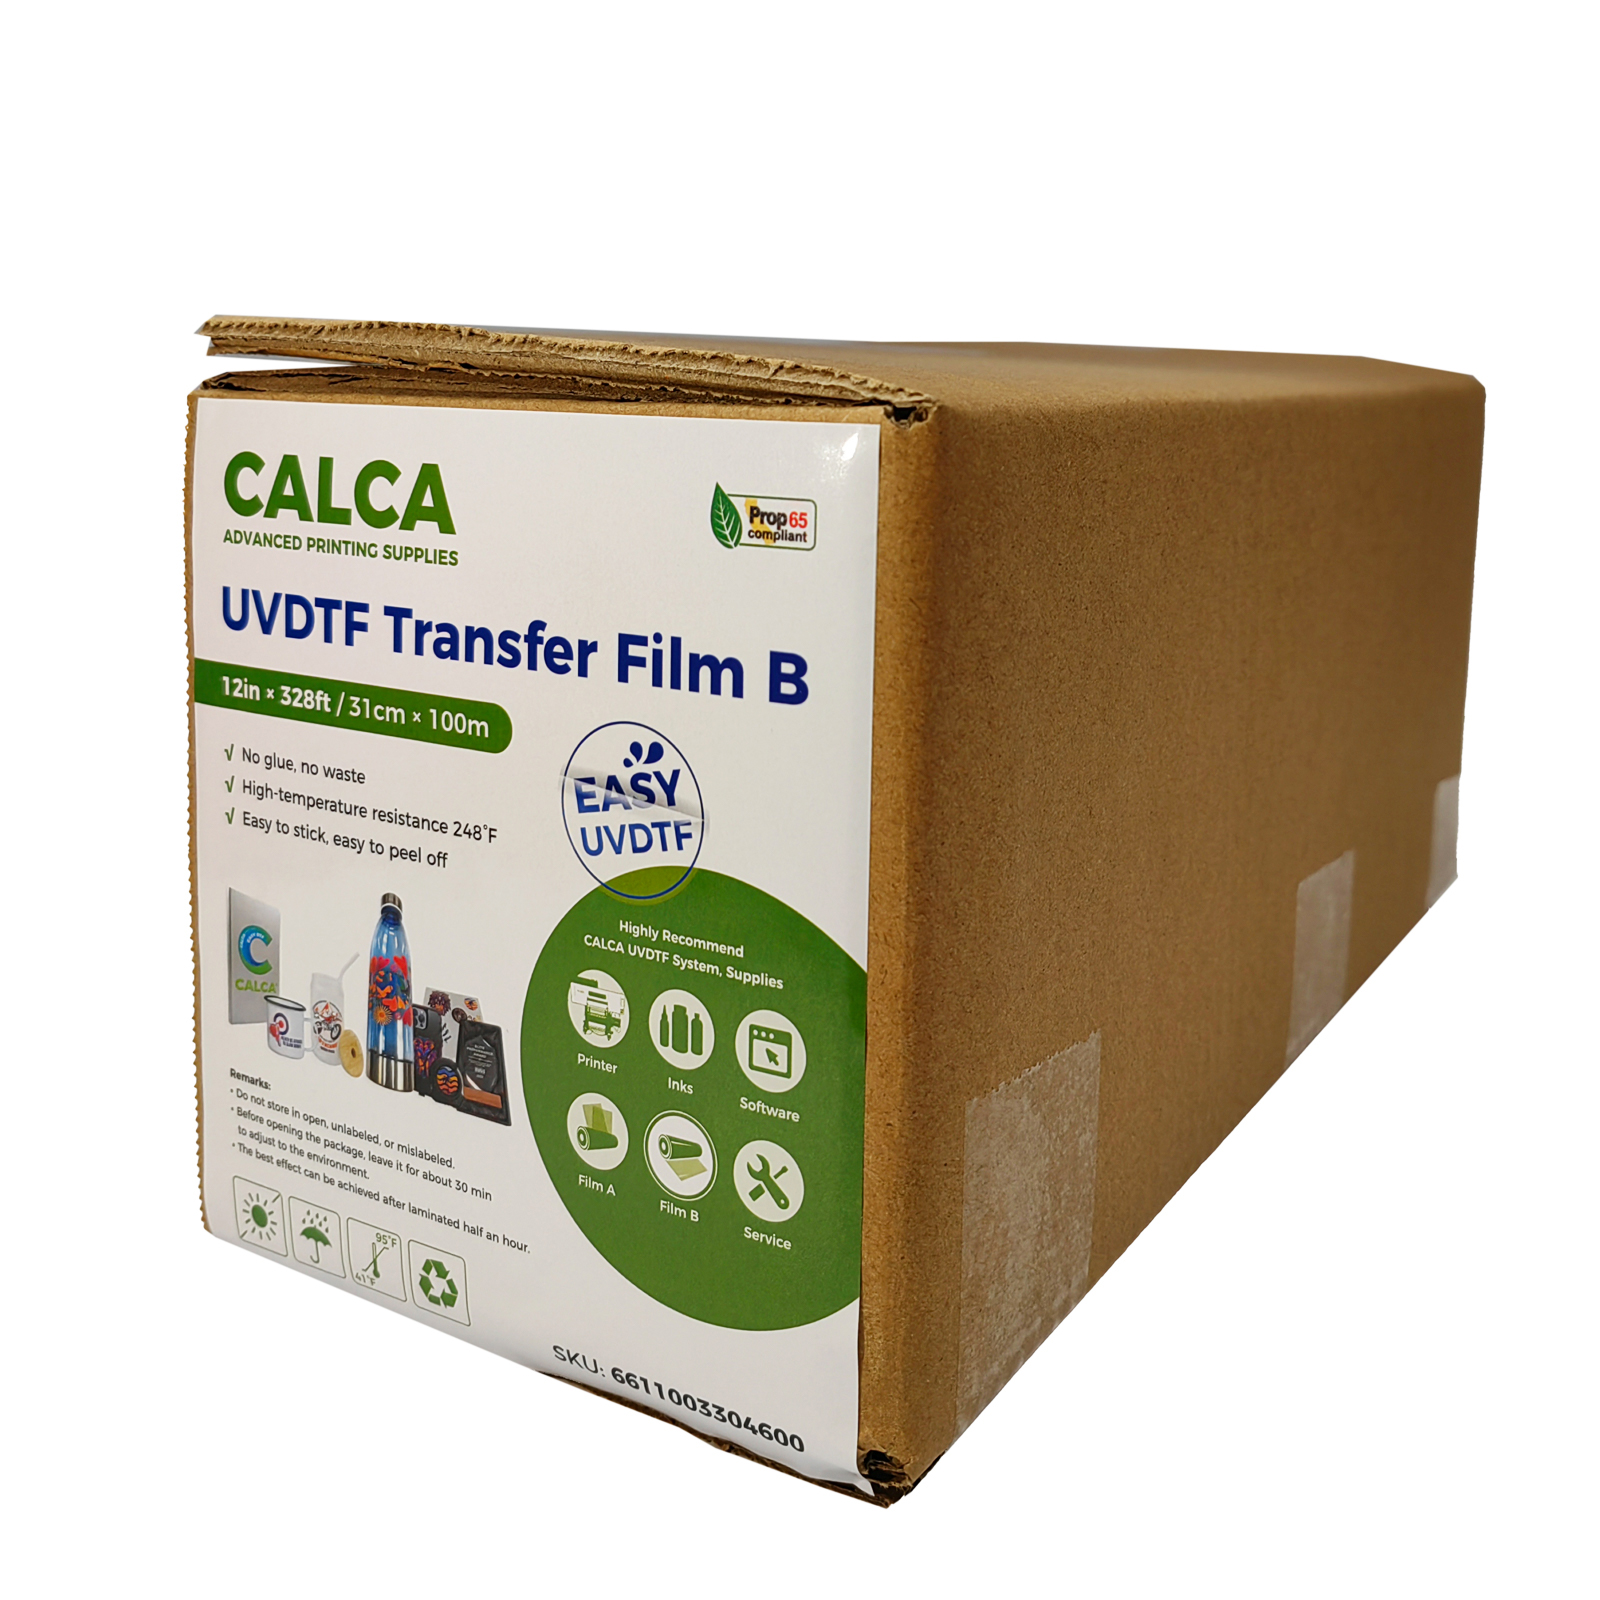 CALCA 12in x 328ft (31cm x 100m) UV DTF Transfer Film B Roll Crystal Label Transfer Film, Positioning Film